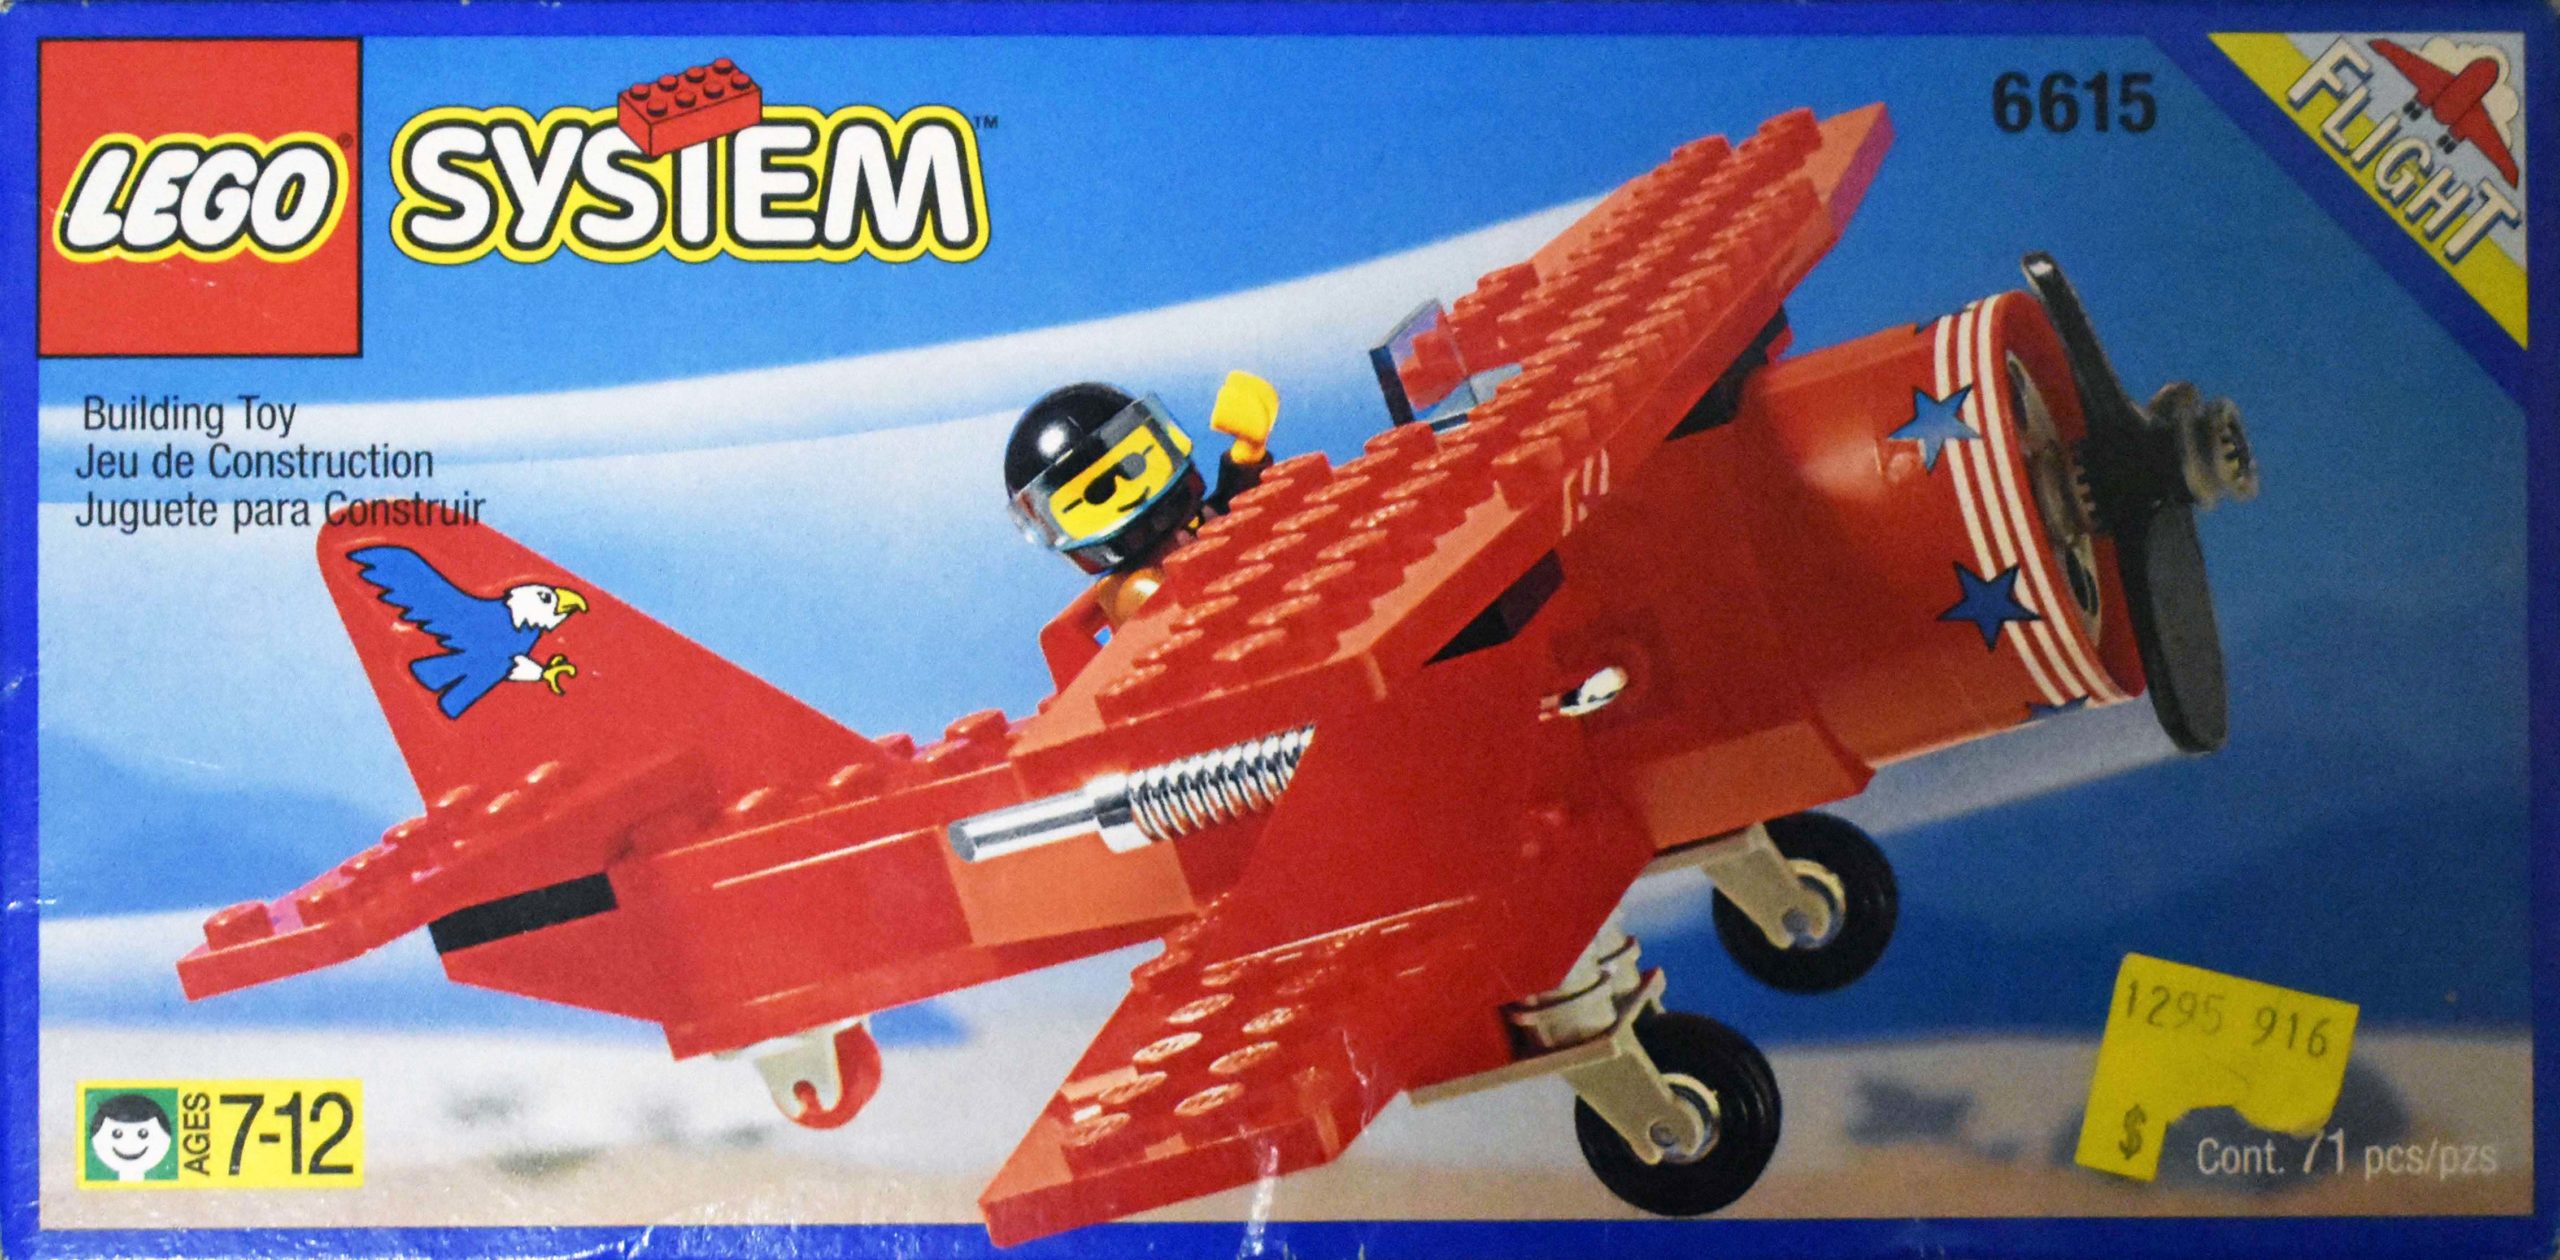 6615: Eagle Stunt Flyer